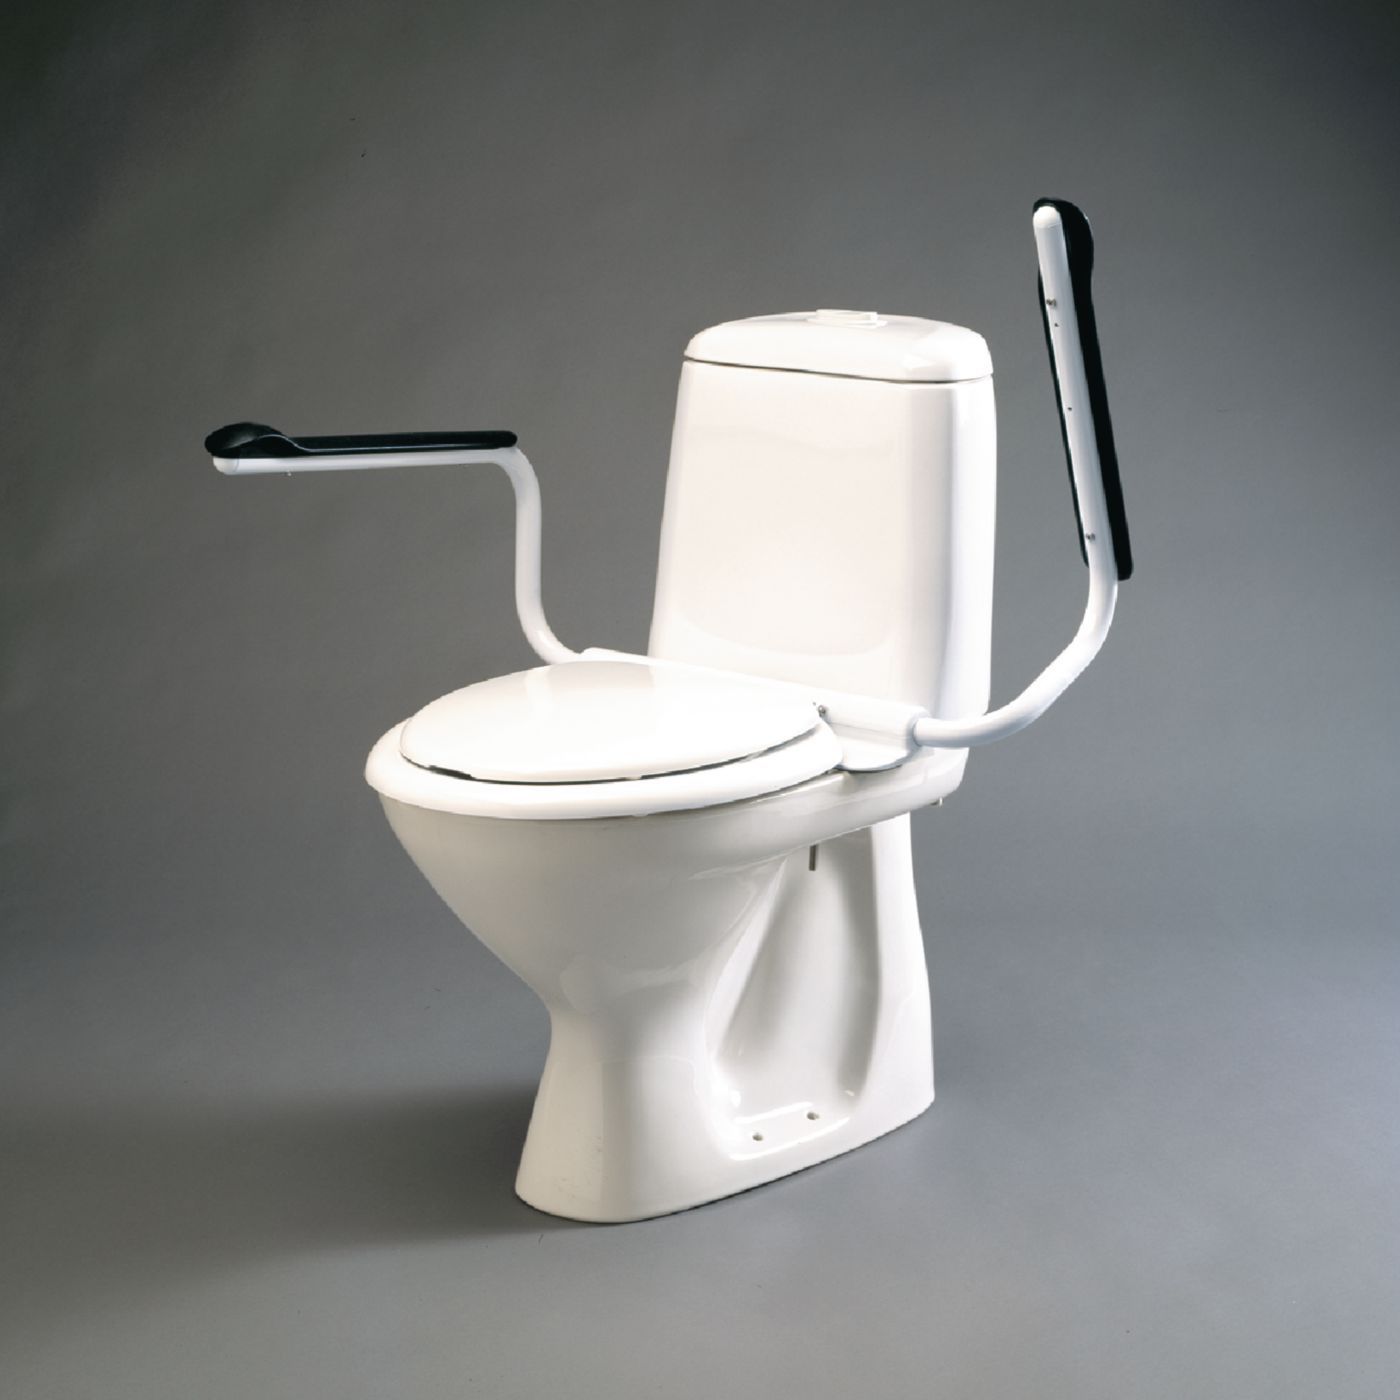 Etac Toilet Support with Armrests